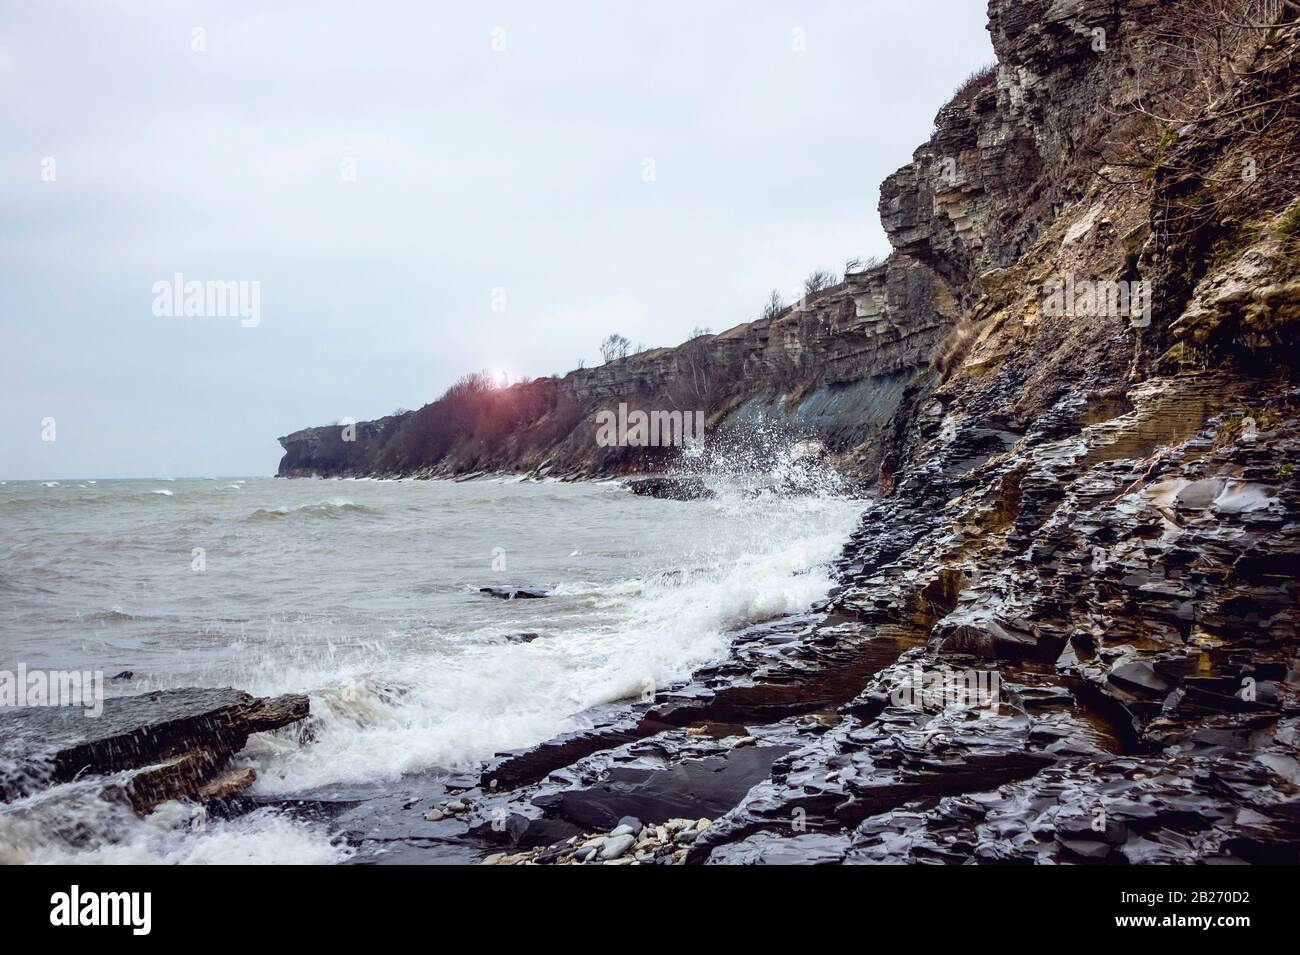 Winter storm on Baltic sea under the bank cliff. Pakri bank in Pakri peninsula near city of Paldiski in Estonia, Europe. Stock Photo